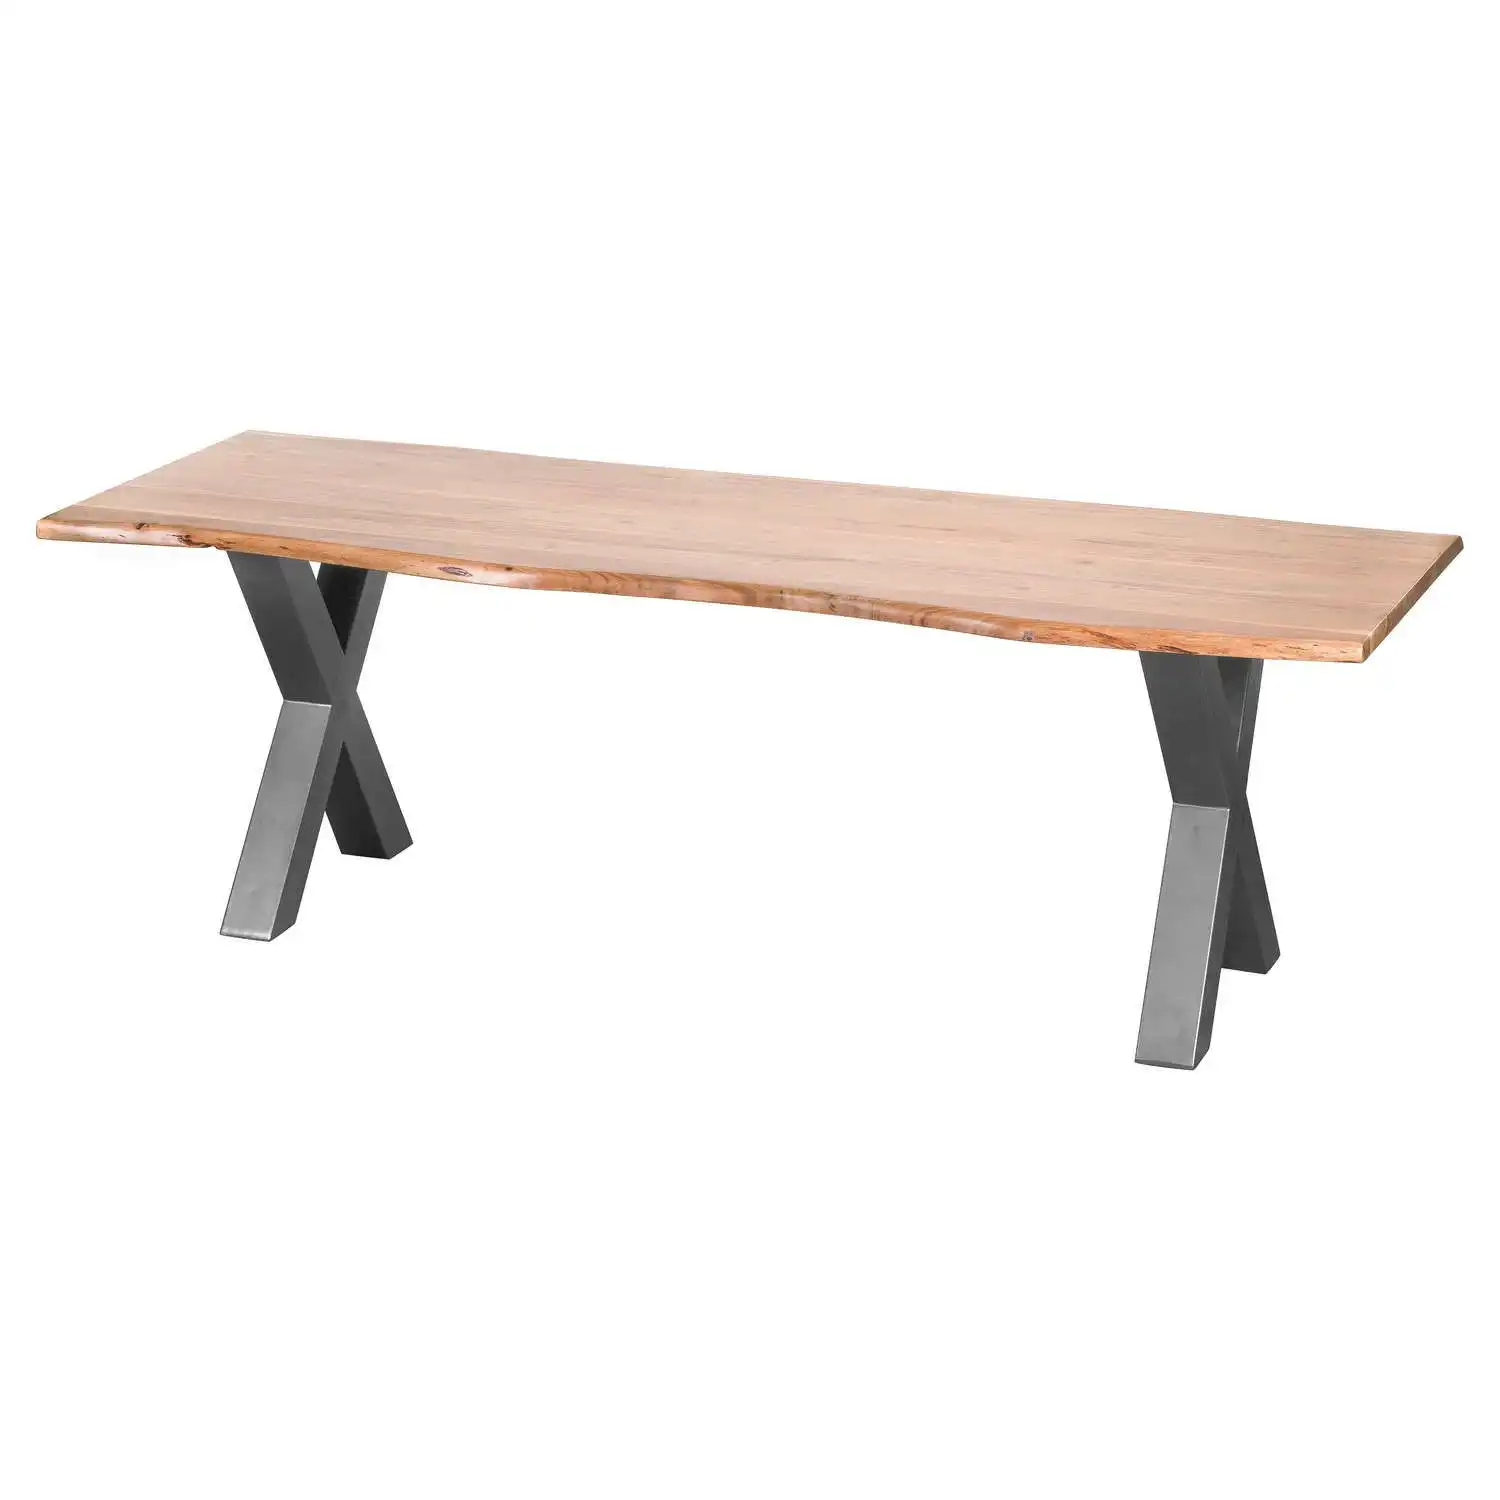 Modern Style Live Edge Acacia Wood Large X Leg Rectangular Dining Table 78 x 100cm